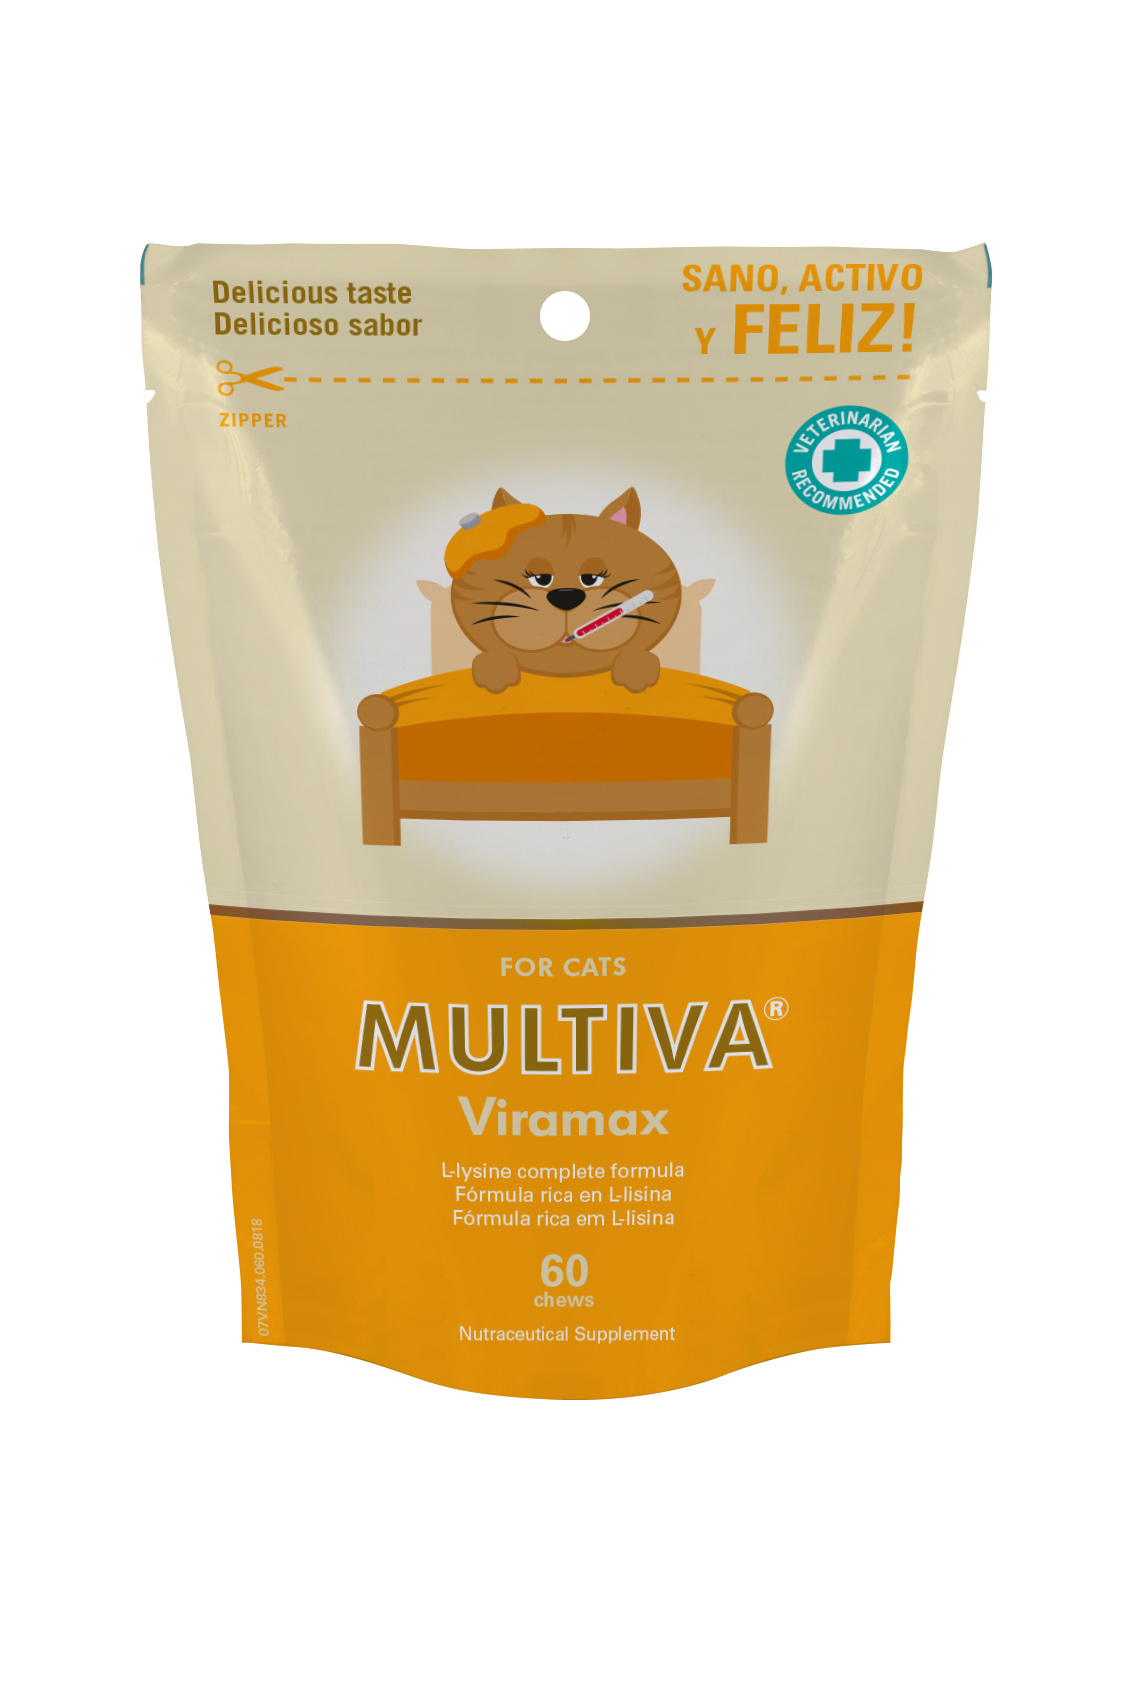 Vetnova Multiva Viramax Alimento complementar dietético para gato